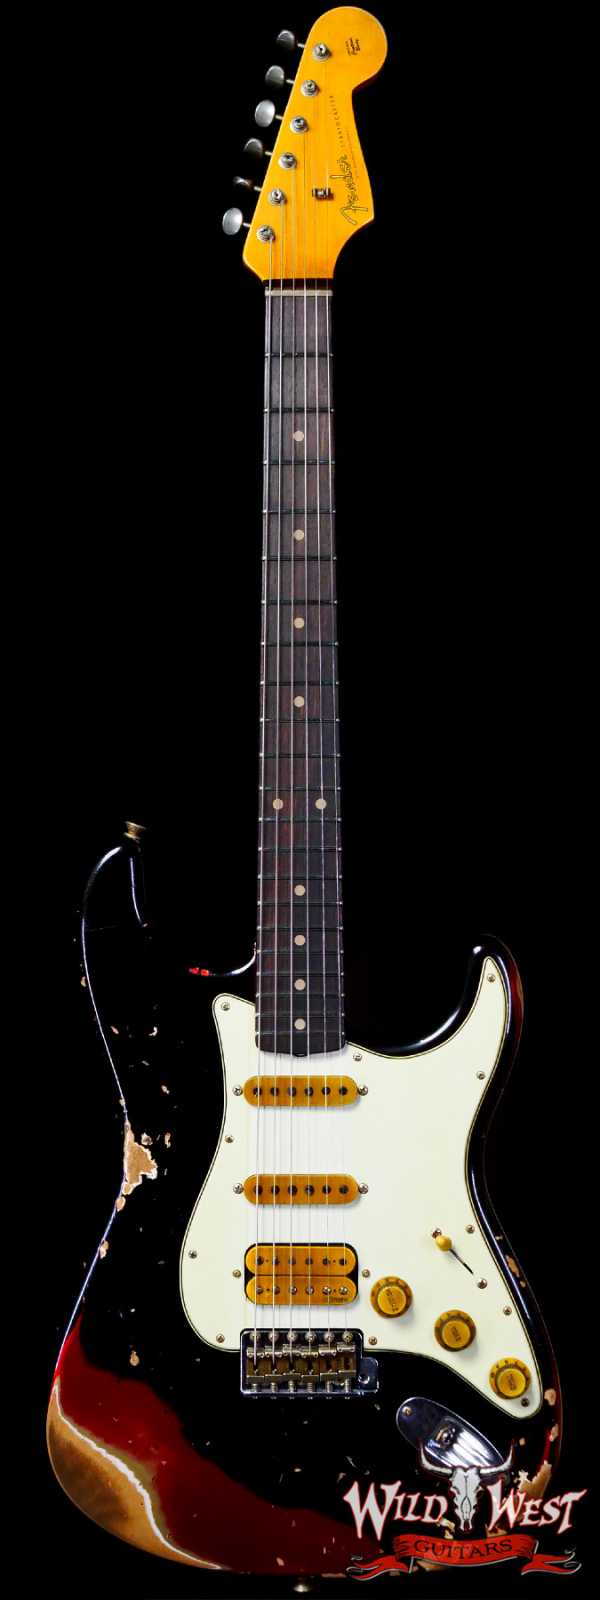 Fender Custom Shop Wild West Black Lightning 2.0 Stratocaster HSS Rosewood Board 21 Frets Heavy Relic Candy Apple Red